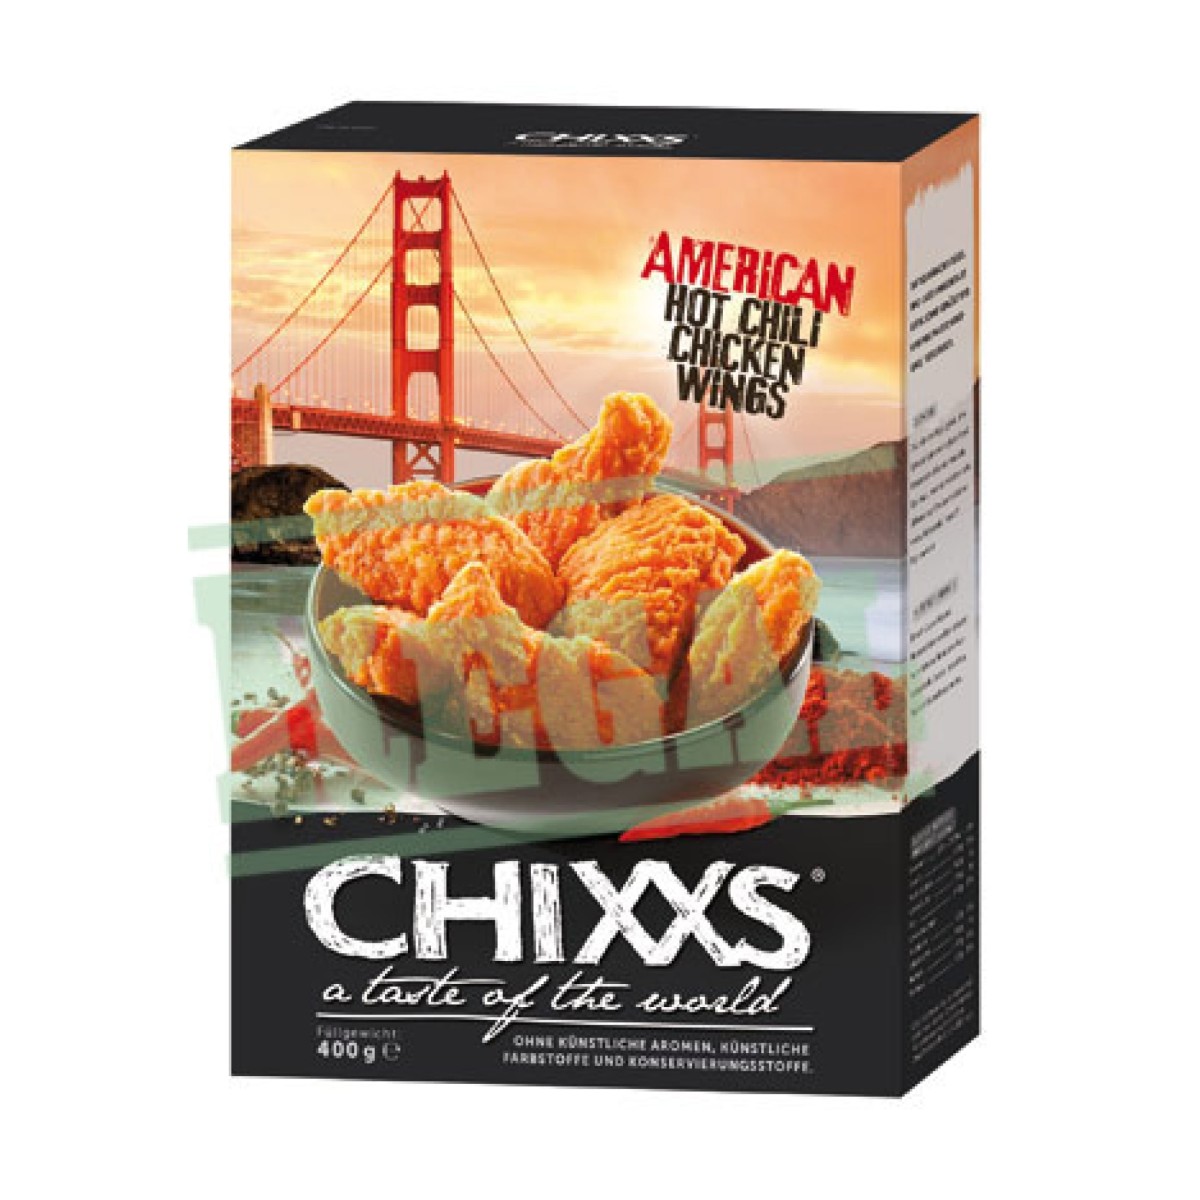 CHIXXS American Hot Chili Chicken Wings → REGAL